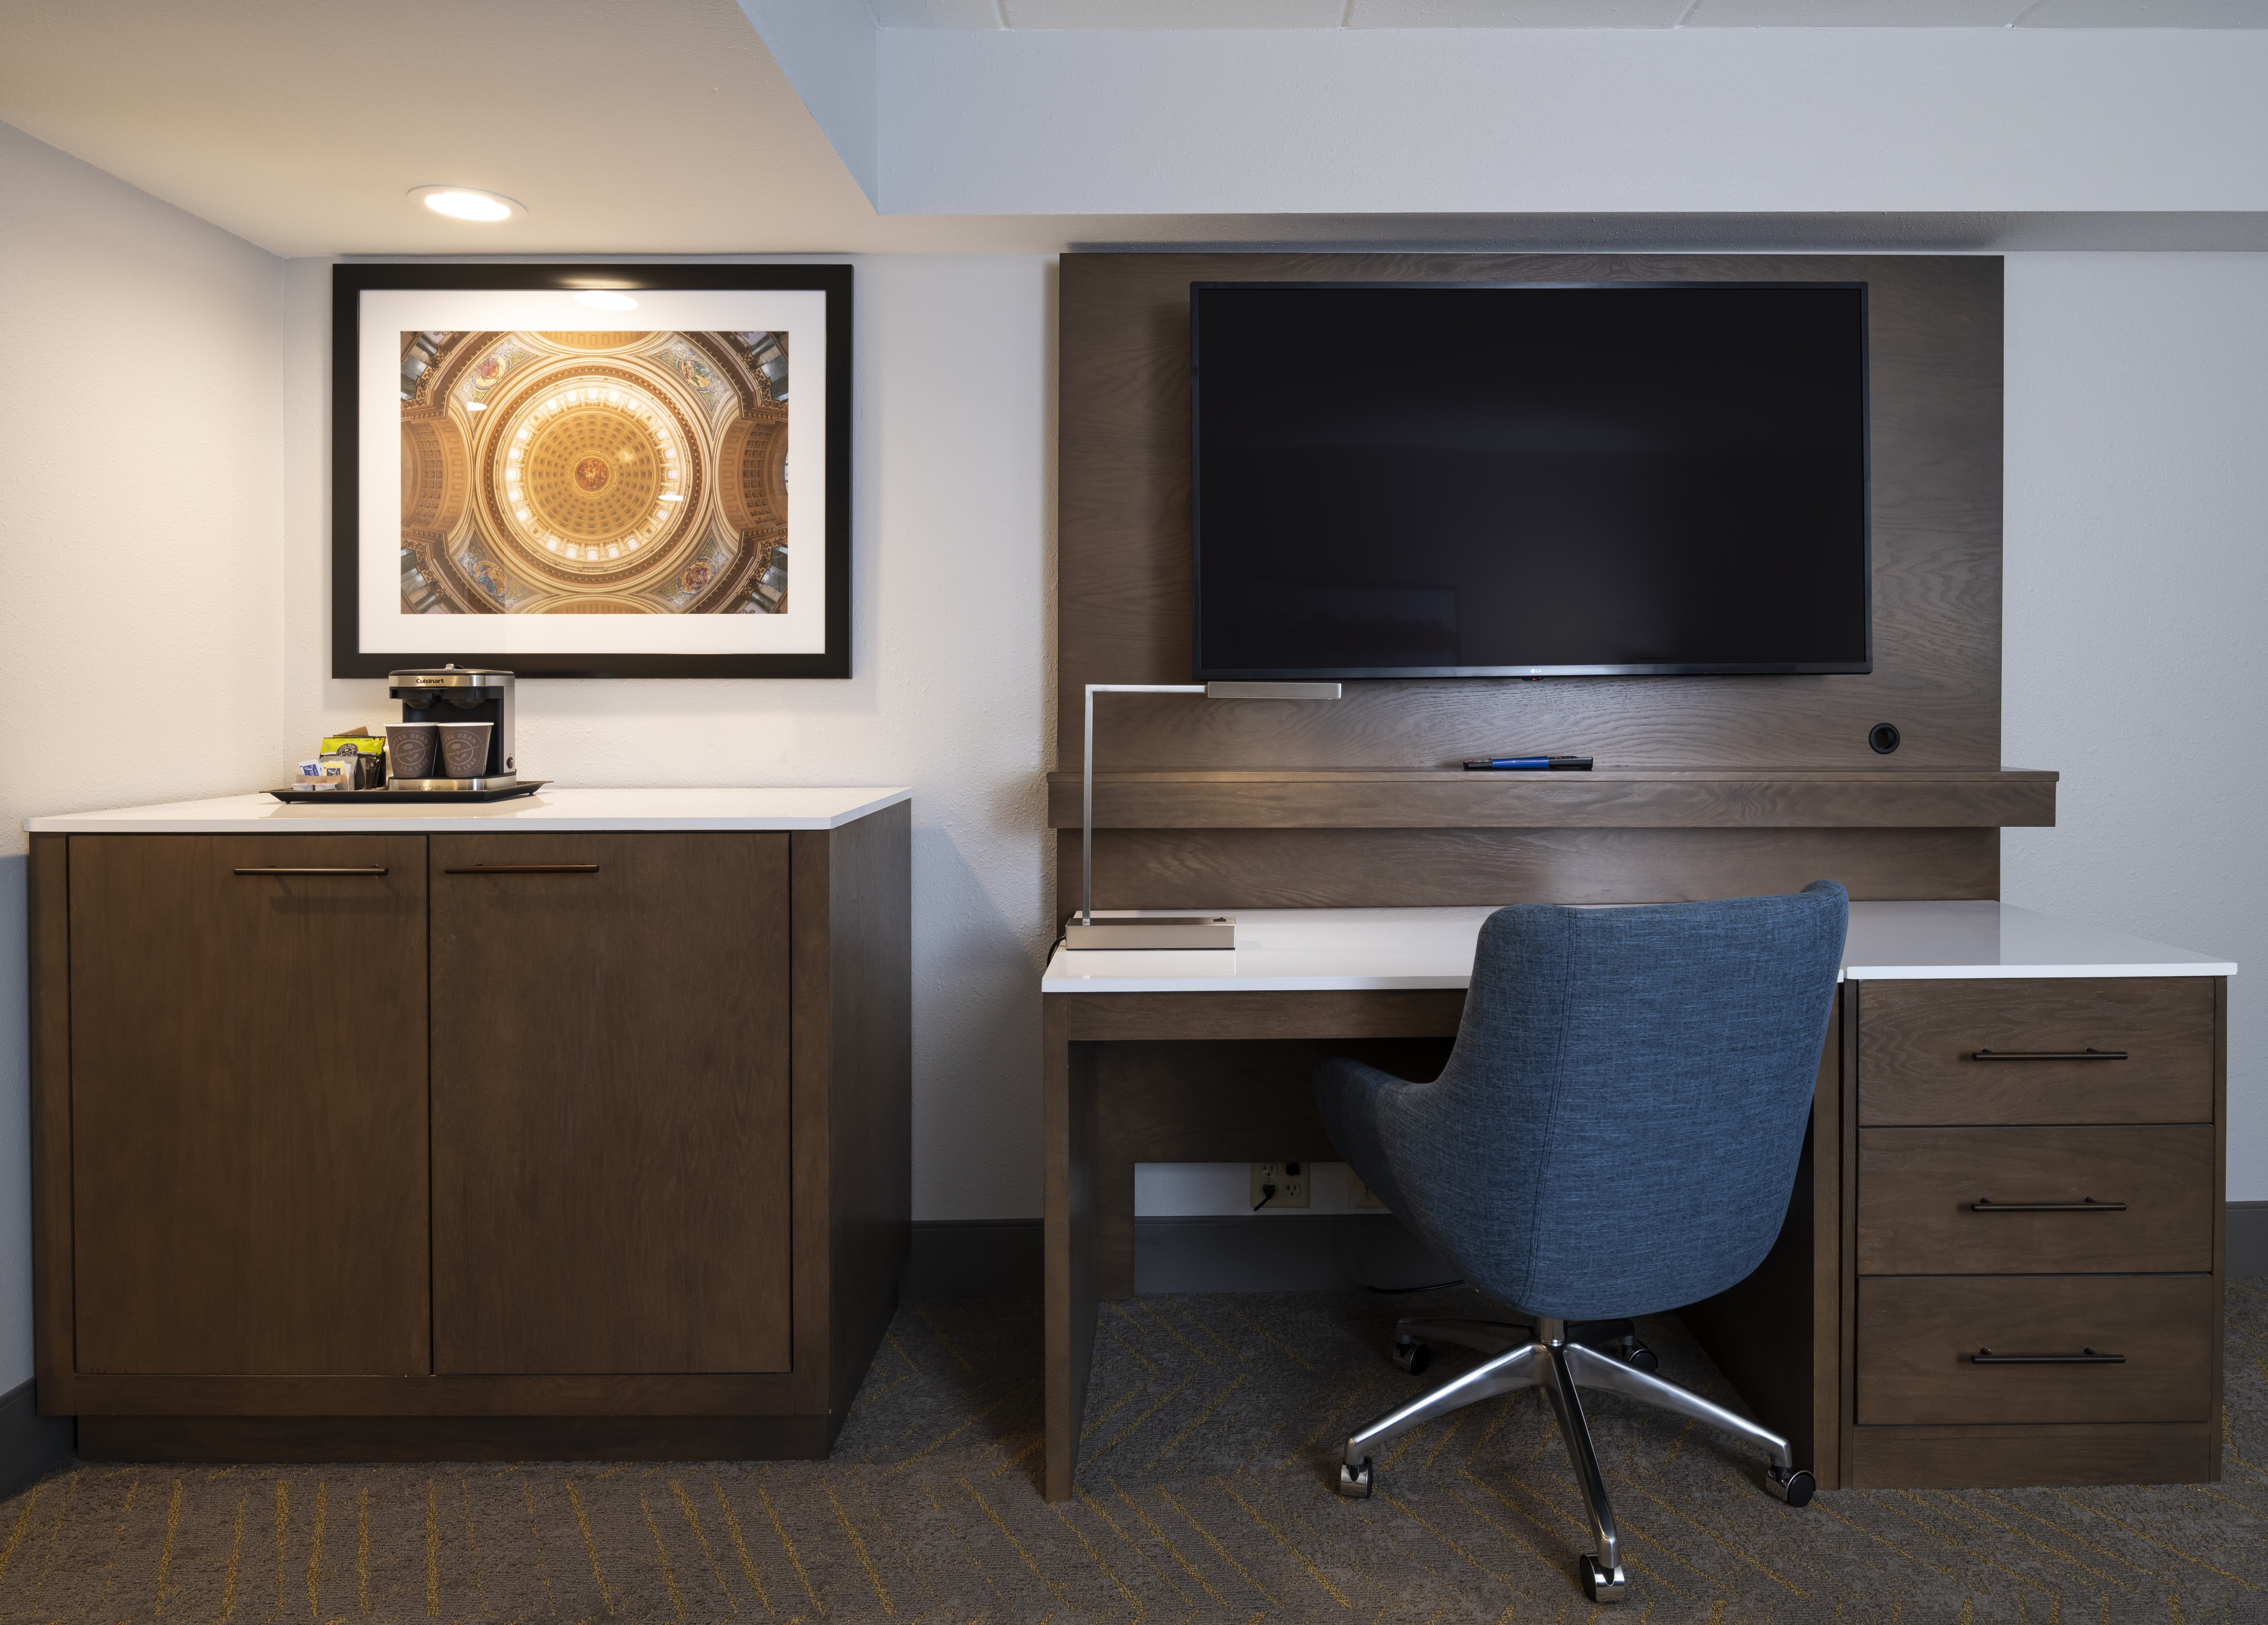 Coffeemaker Desk Area and HDTV in Hotel Suite